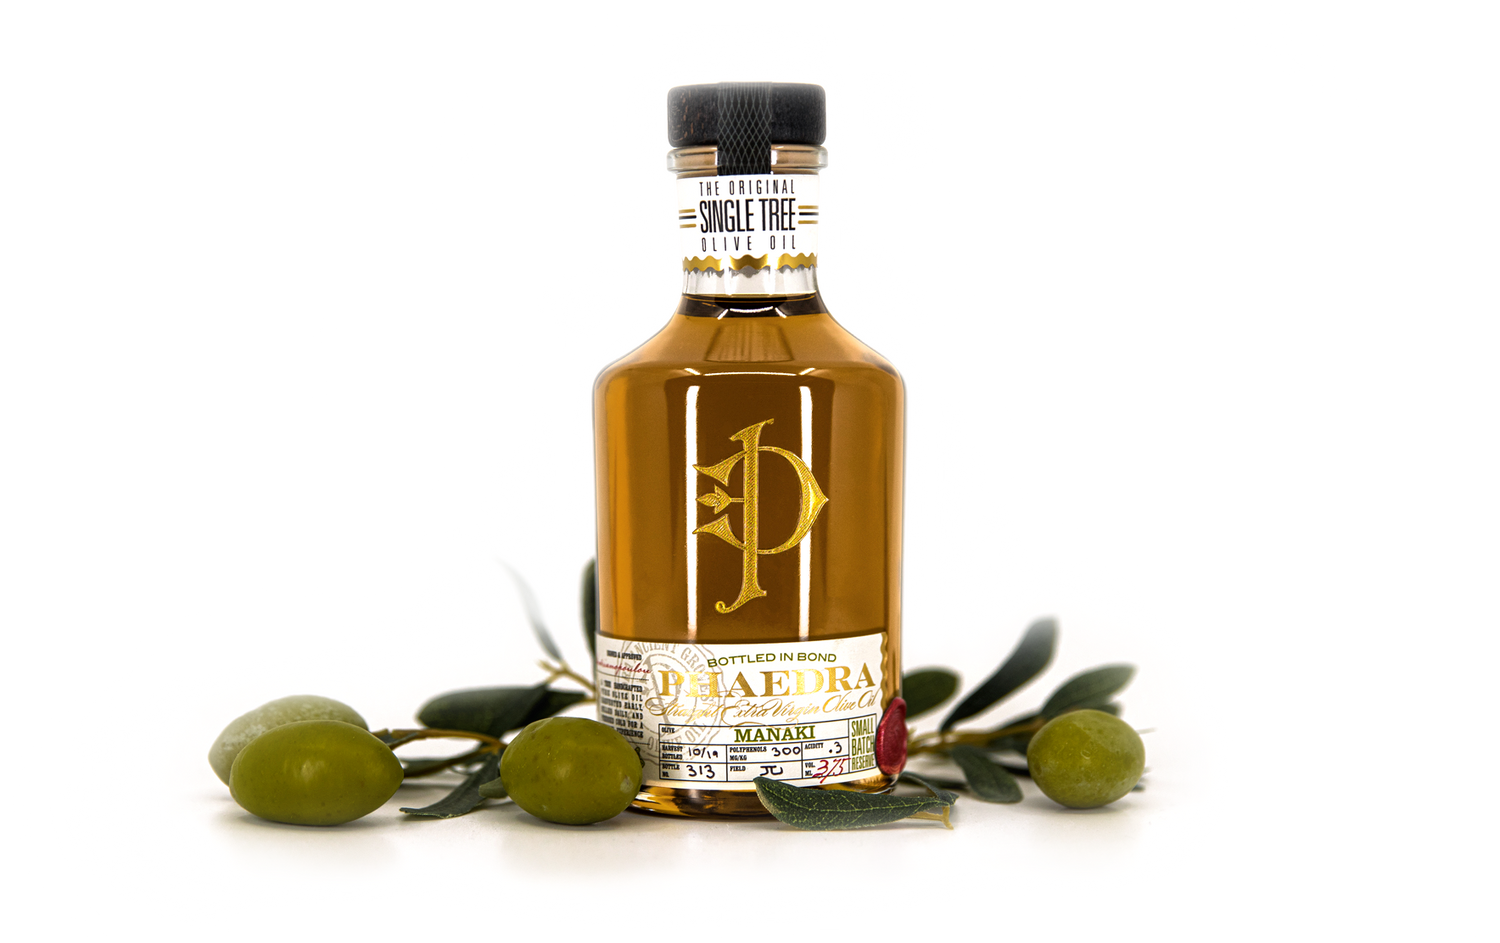 5 Gallon Bulk Ancient Groves Extra-Virgin Olive Oil